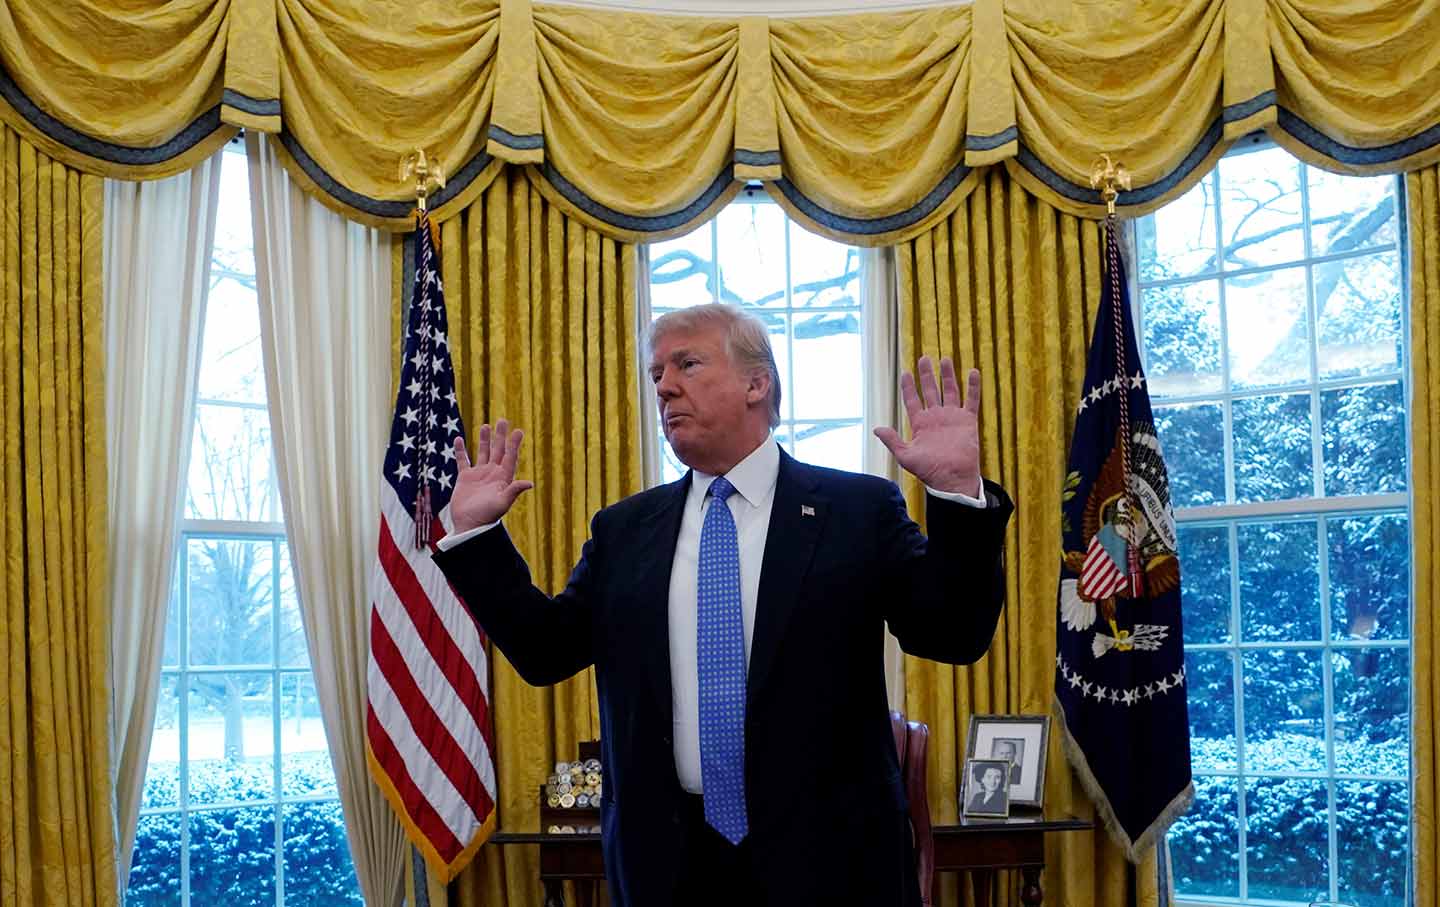 Trump Oval Office Hands Raised